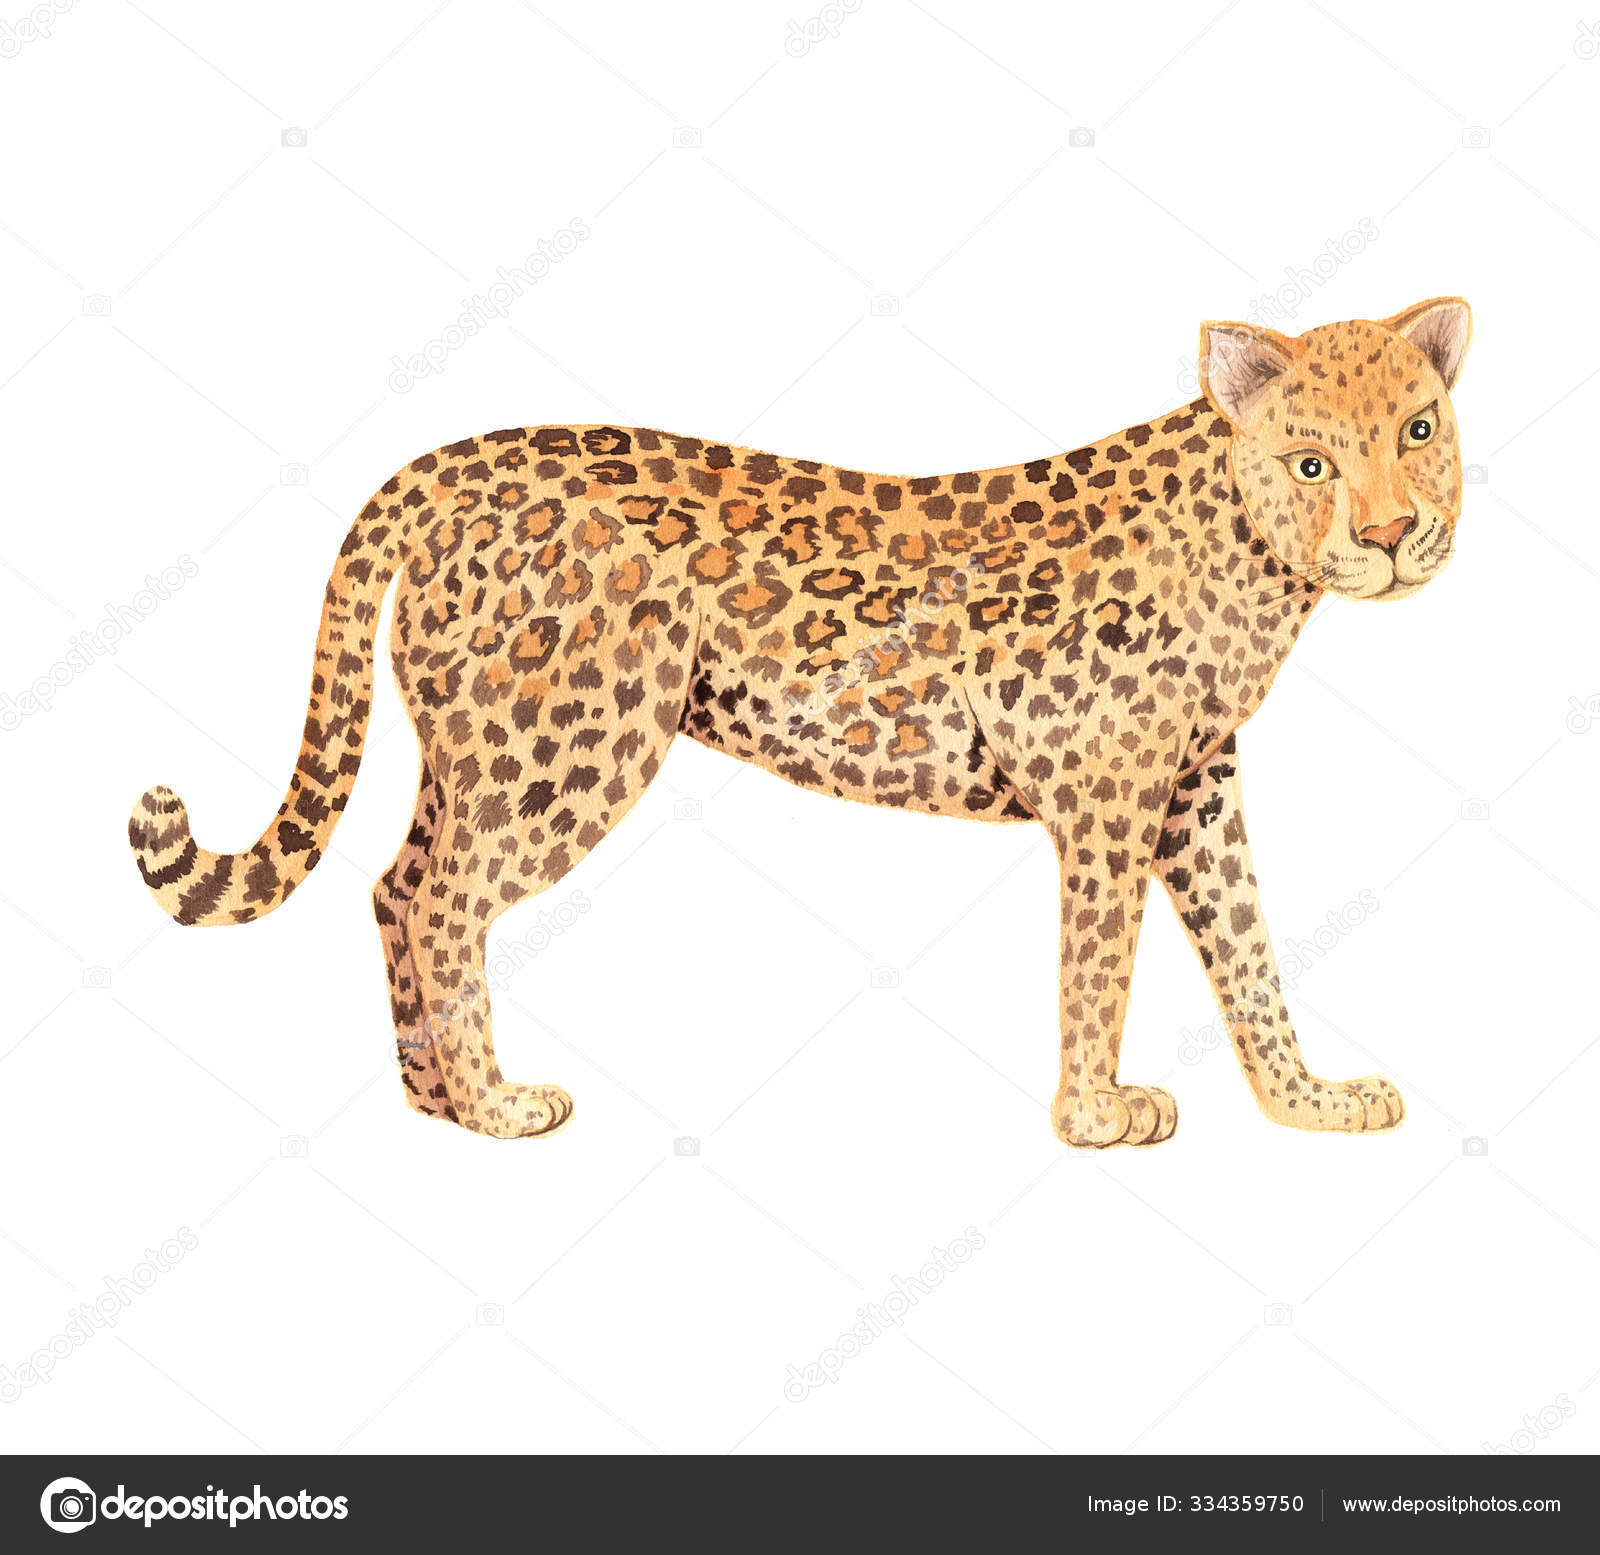 Cartoon watercolor cheetah Stock Photos, Royalty Free Cartoon watercolor  cheetah Images | Depositphotos